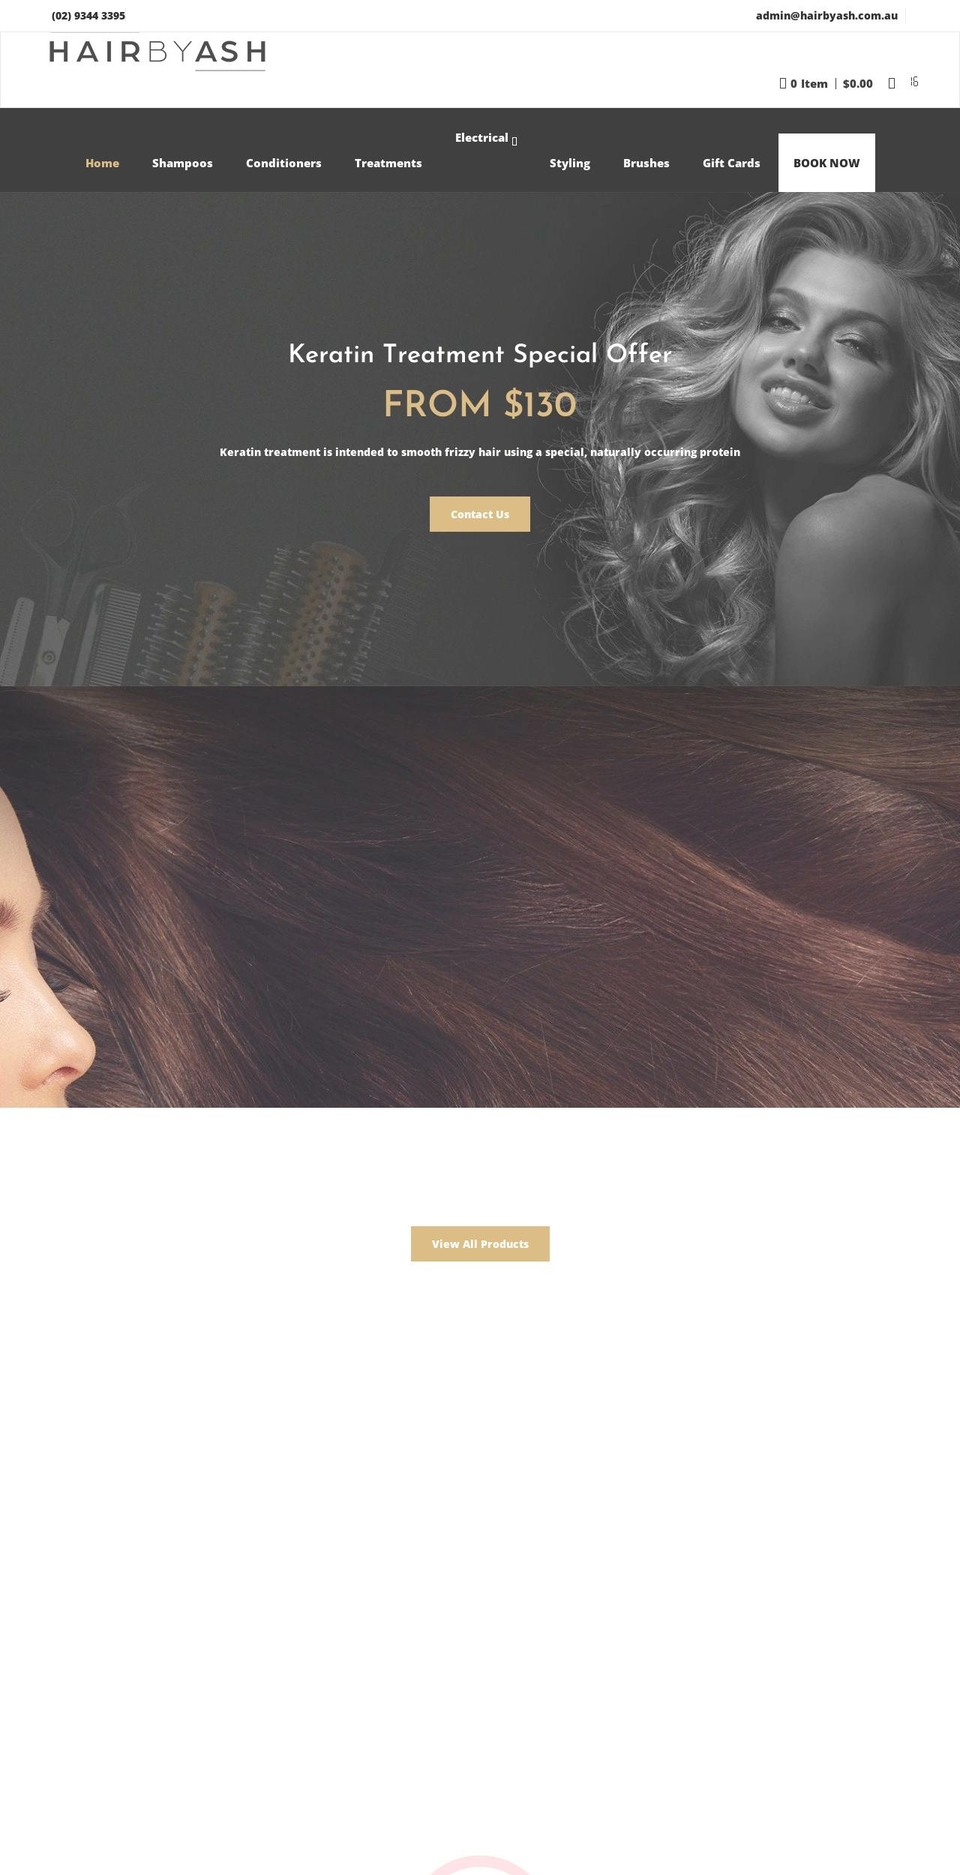 hairbyash.com.au shopify website screenshot